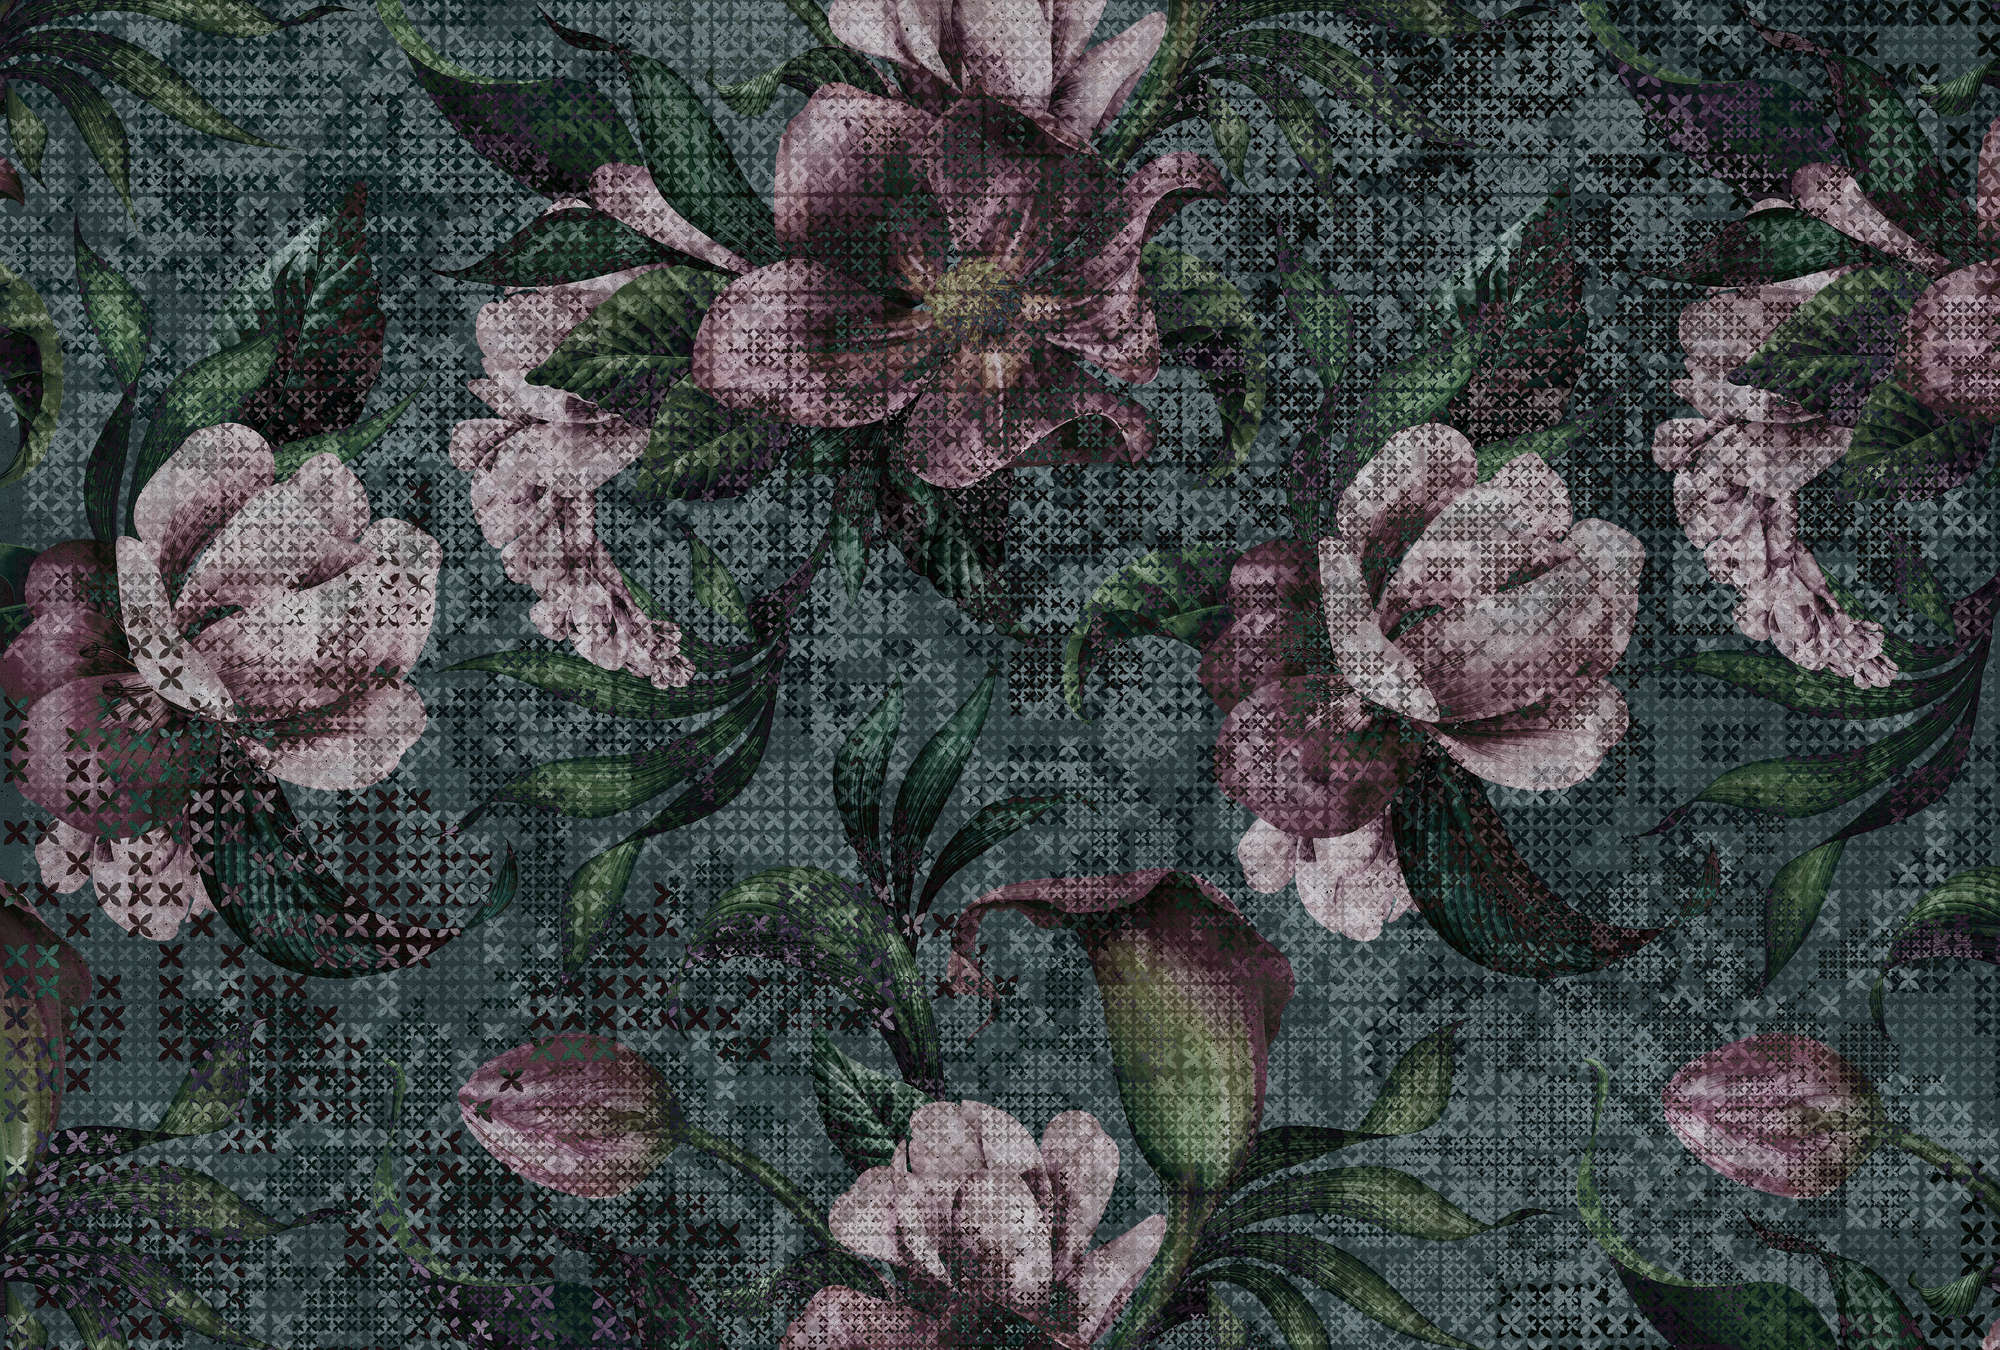             Flowers mural Pixel Design - Green, Pink
        